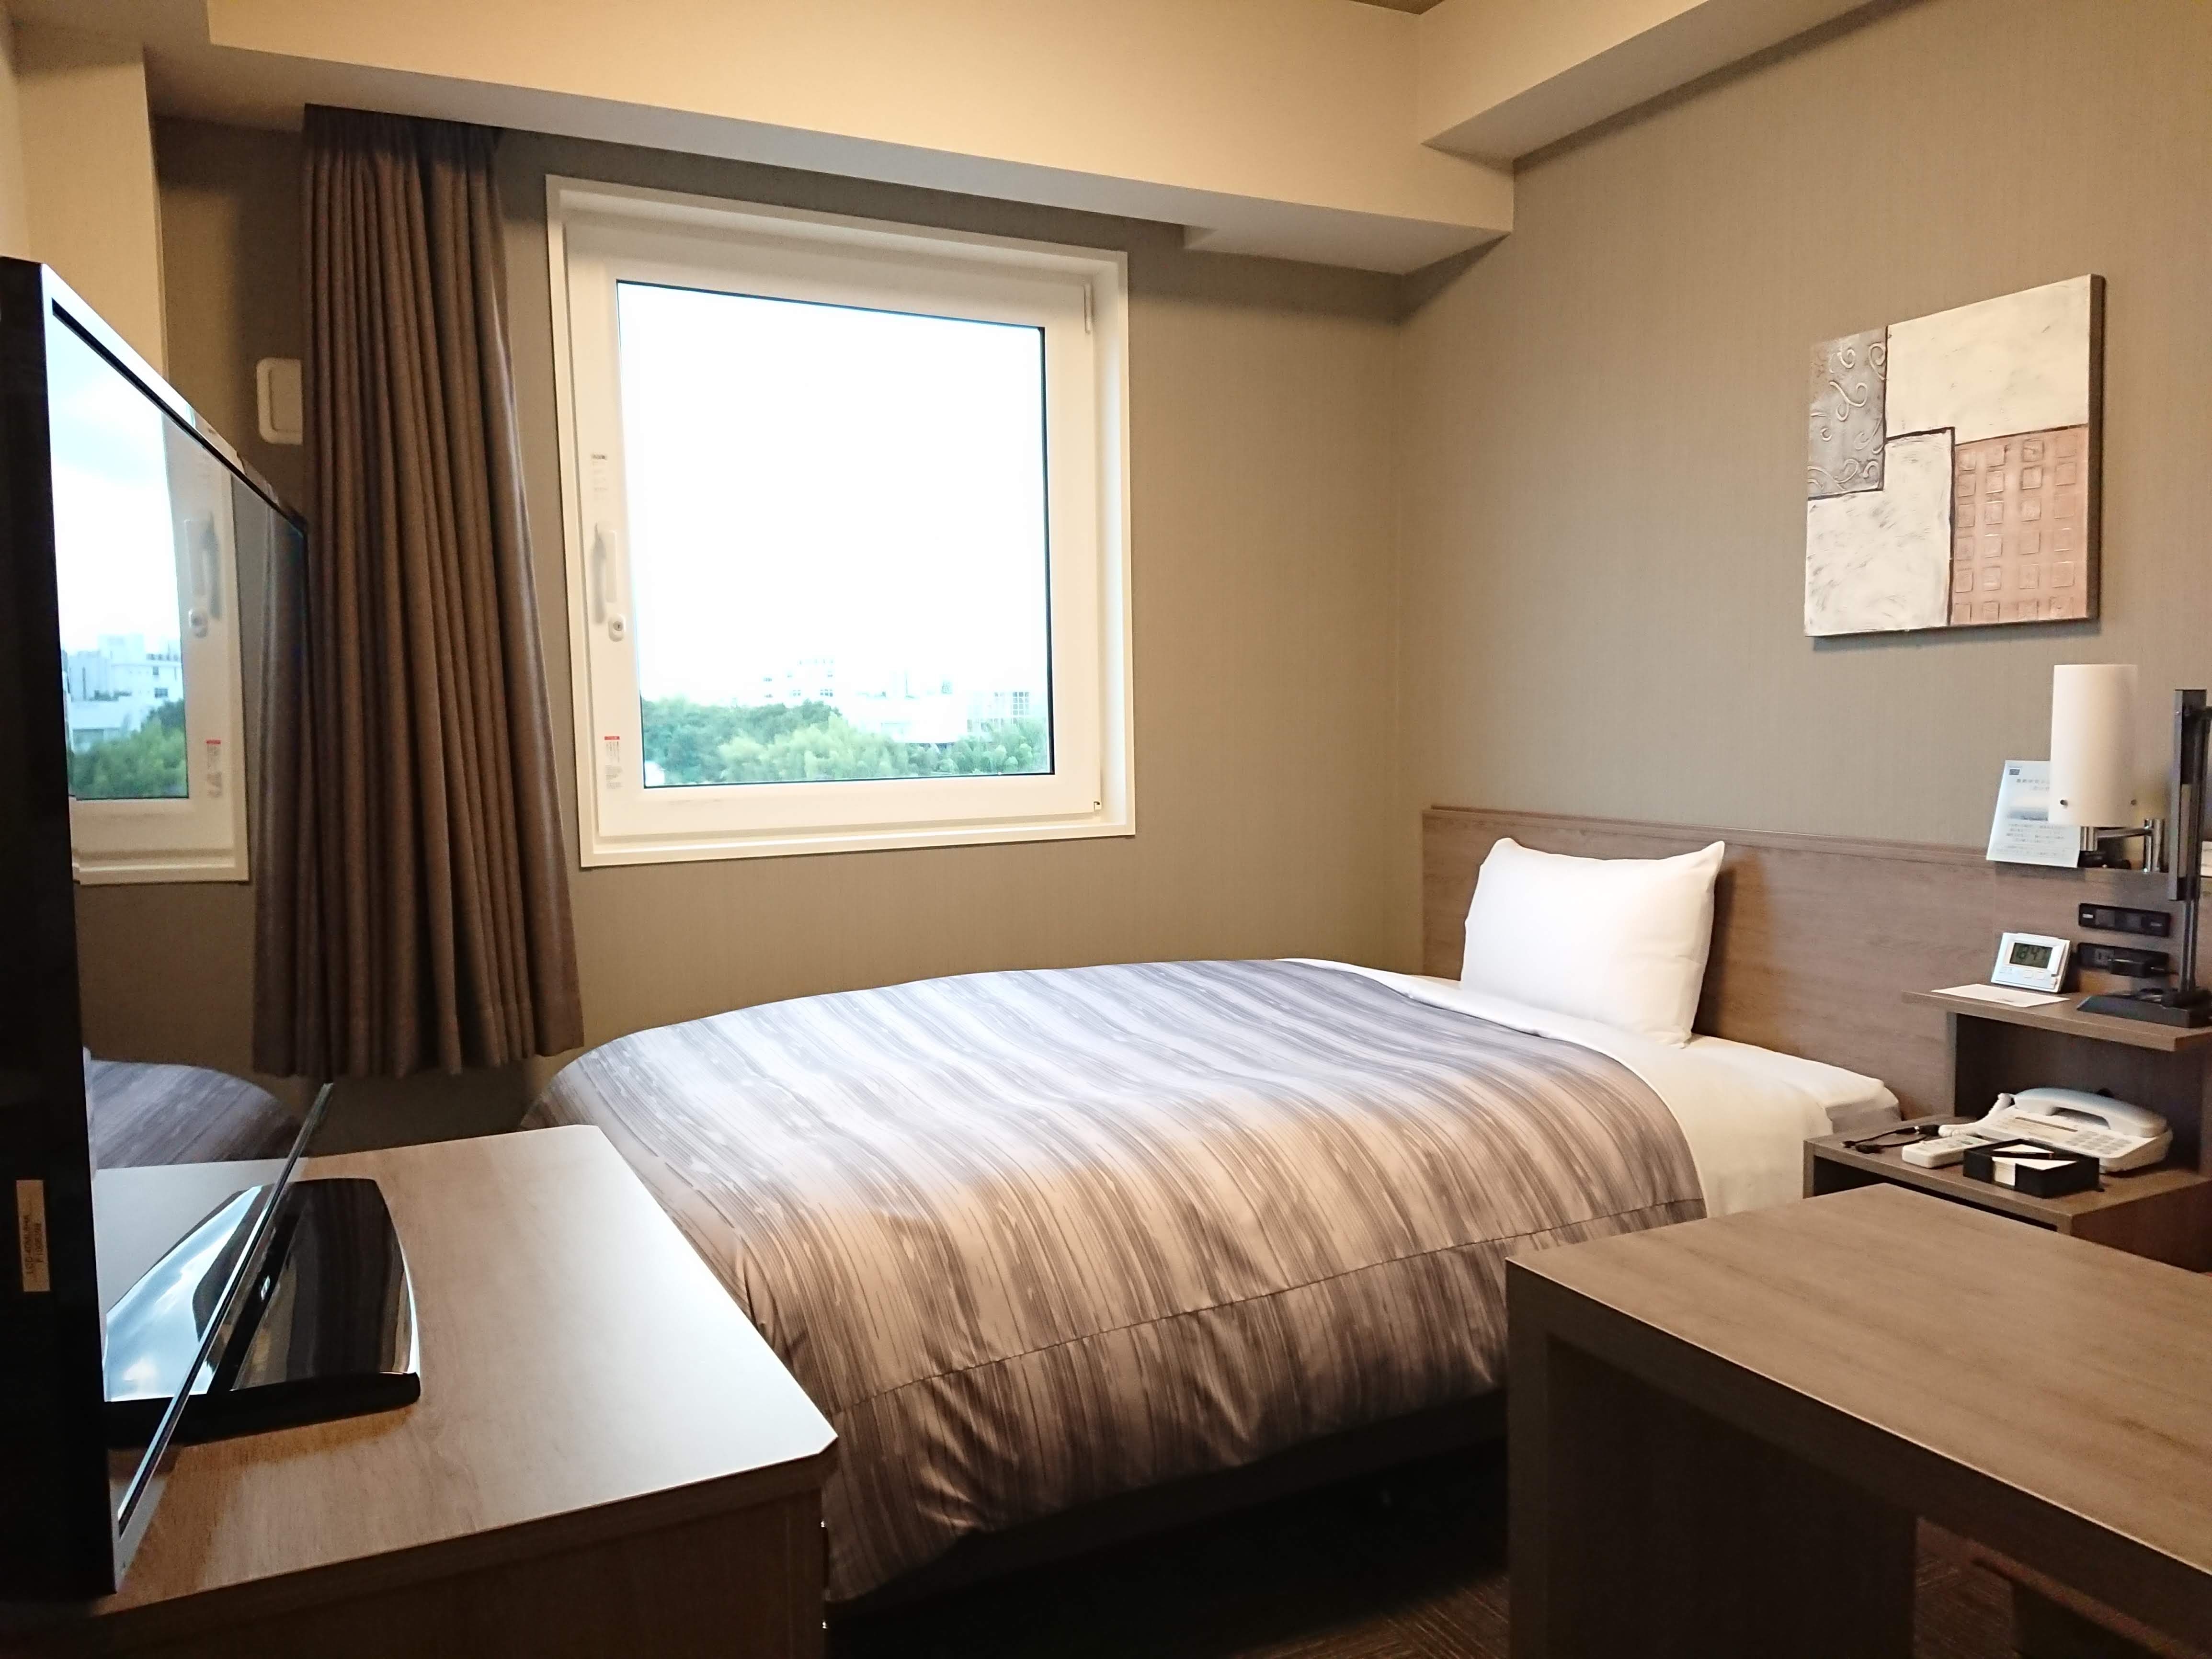 [Guest room] Comfort single room 14 square meters, bed width 130 cm